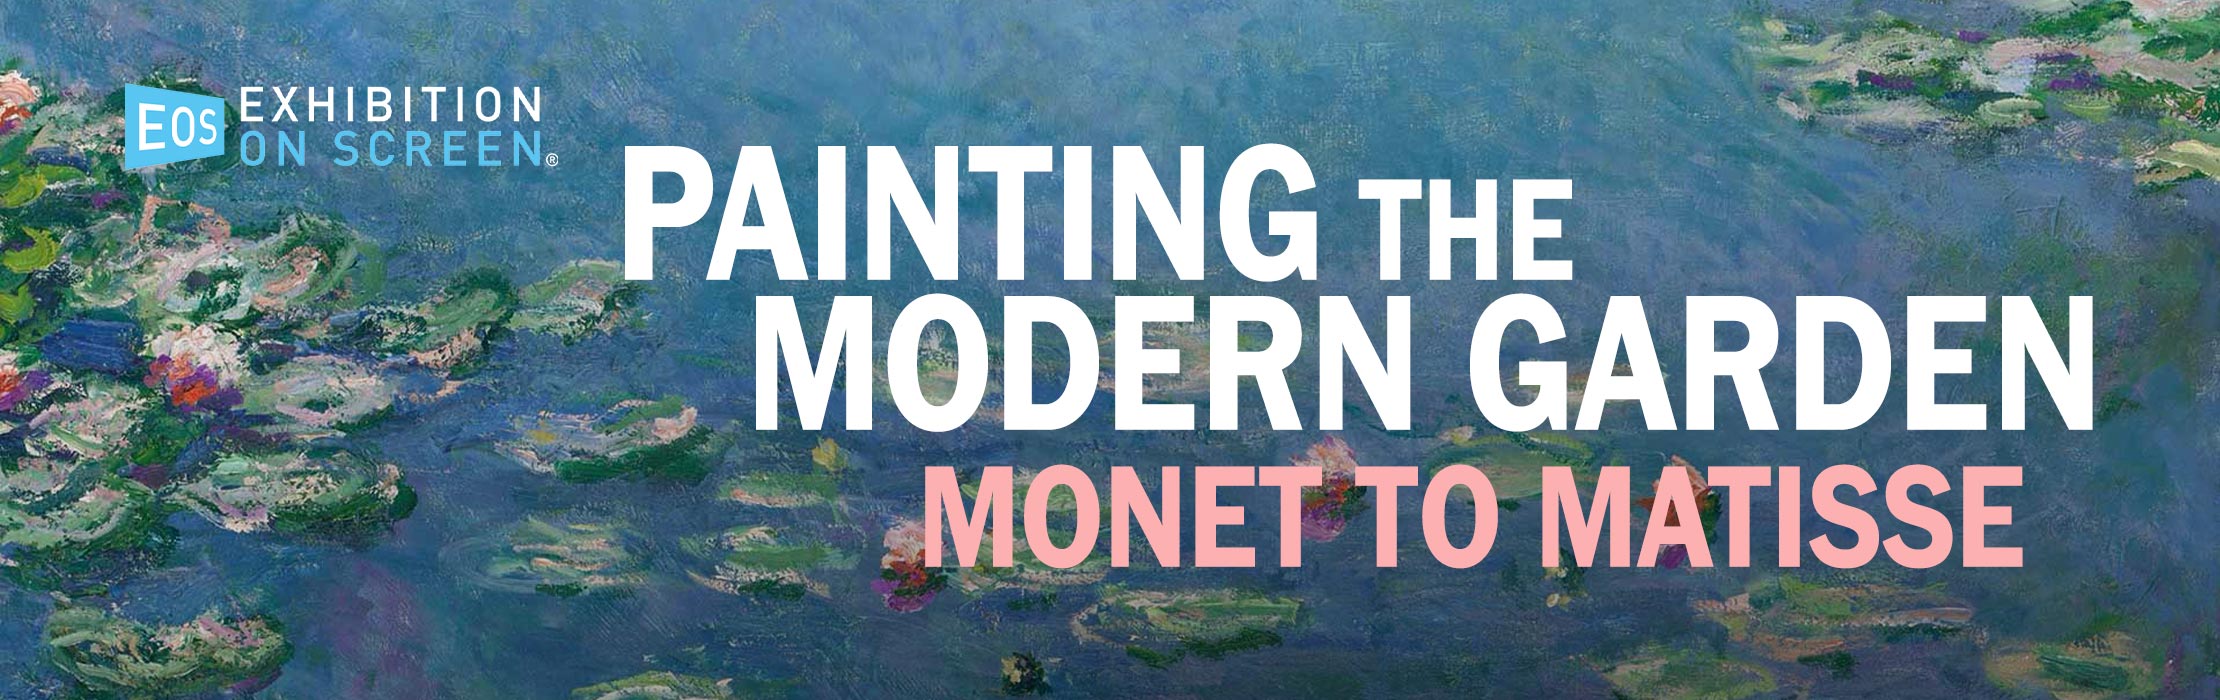 EOS Painting The Modern Garden Monet To Matisse